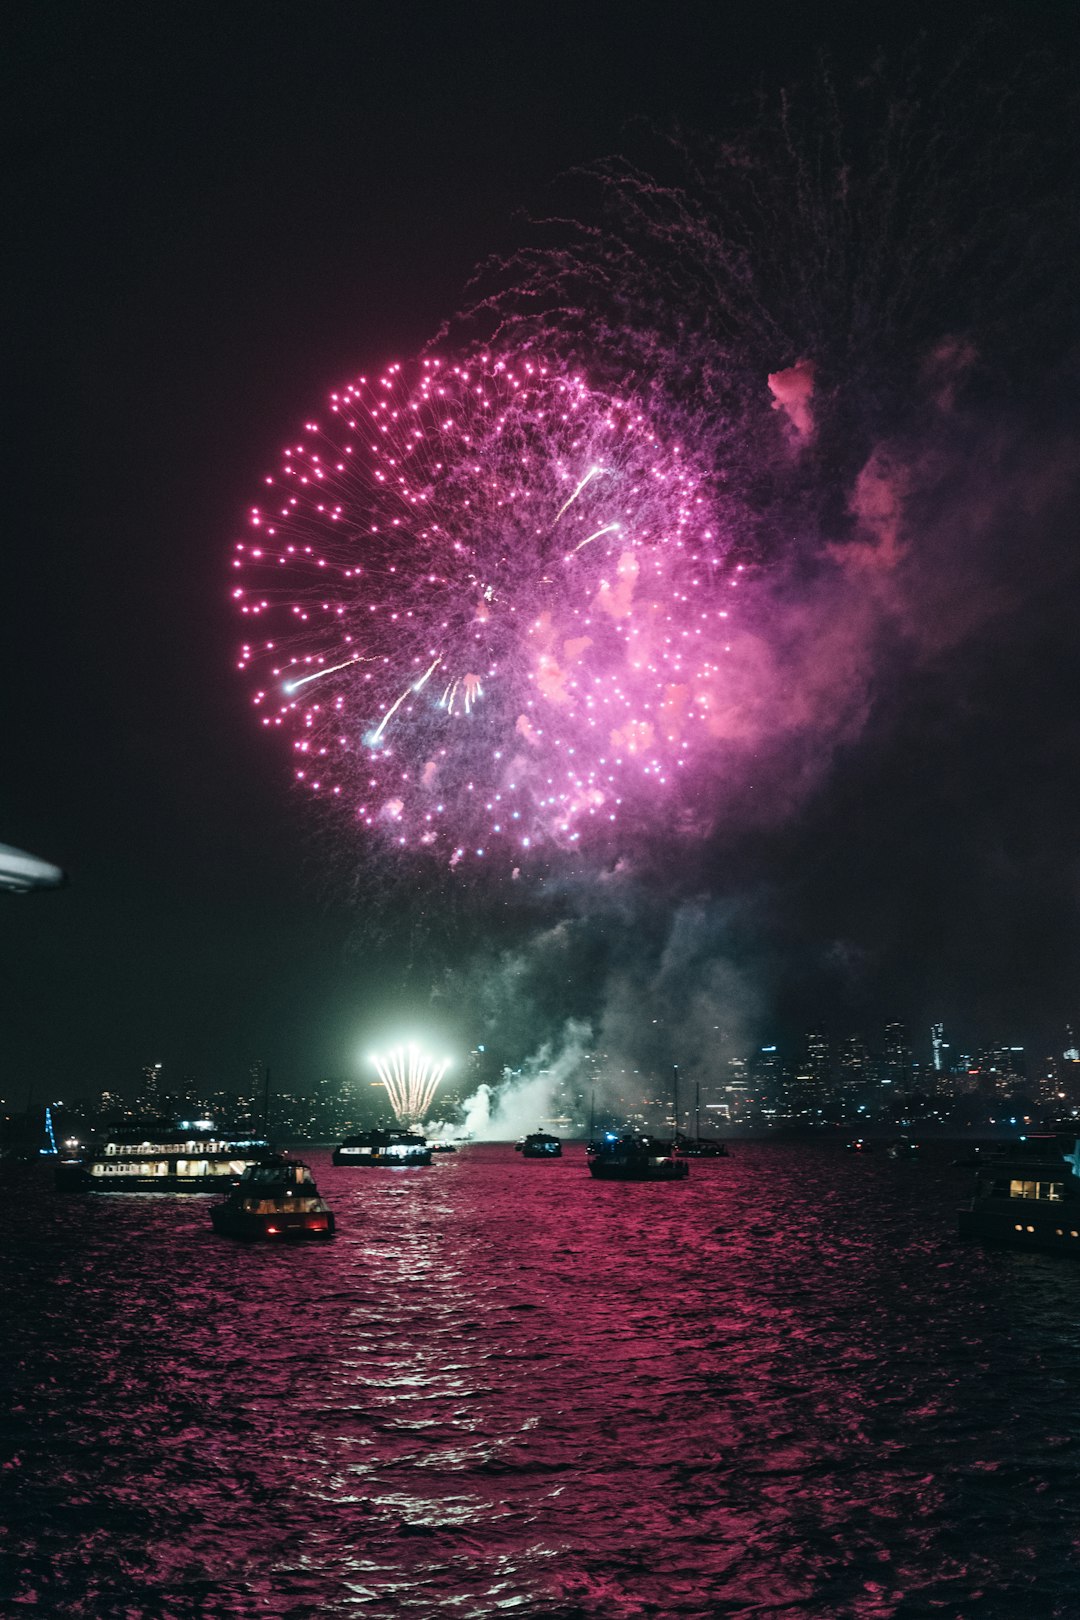 fireworks during nighttime